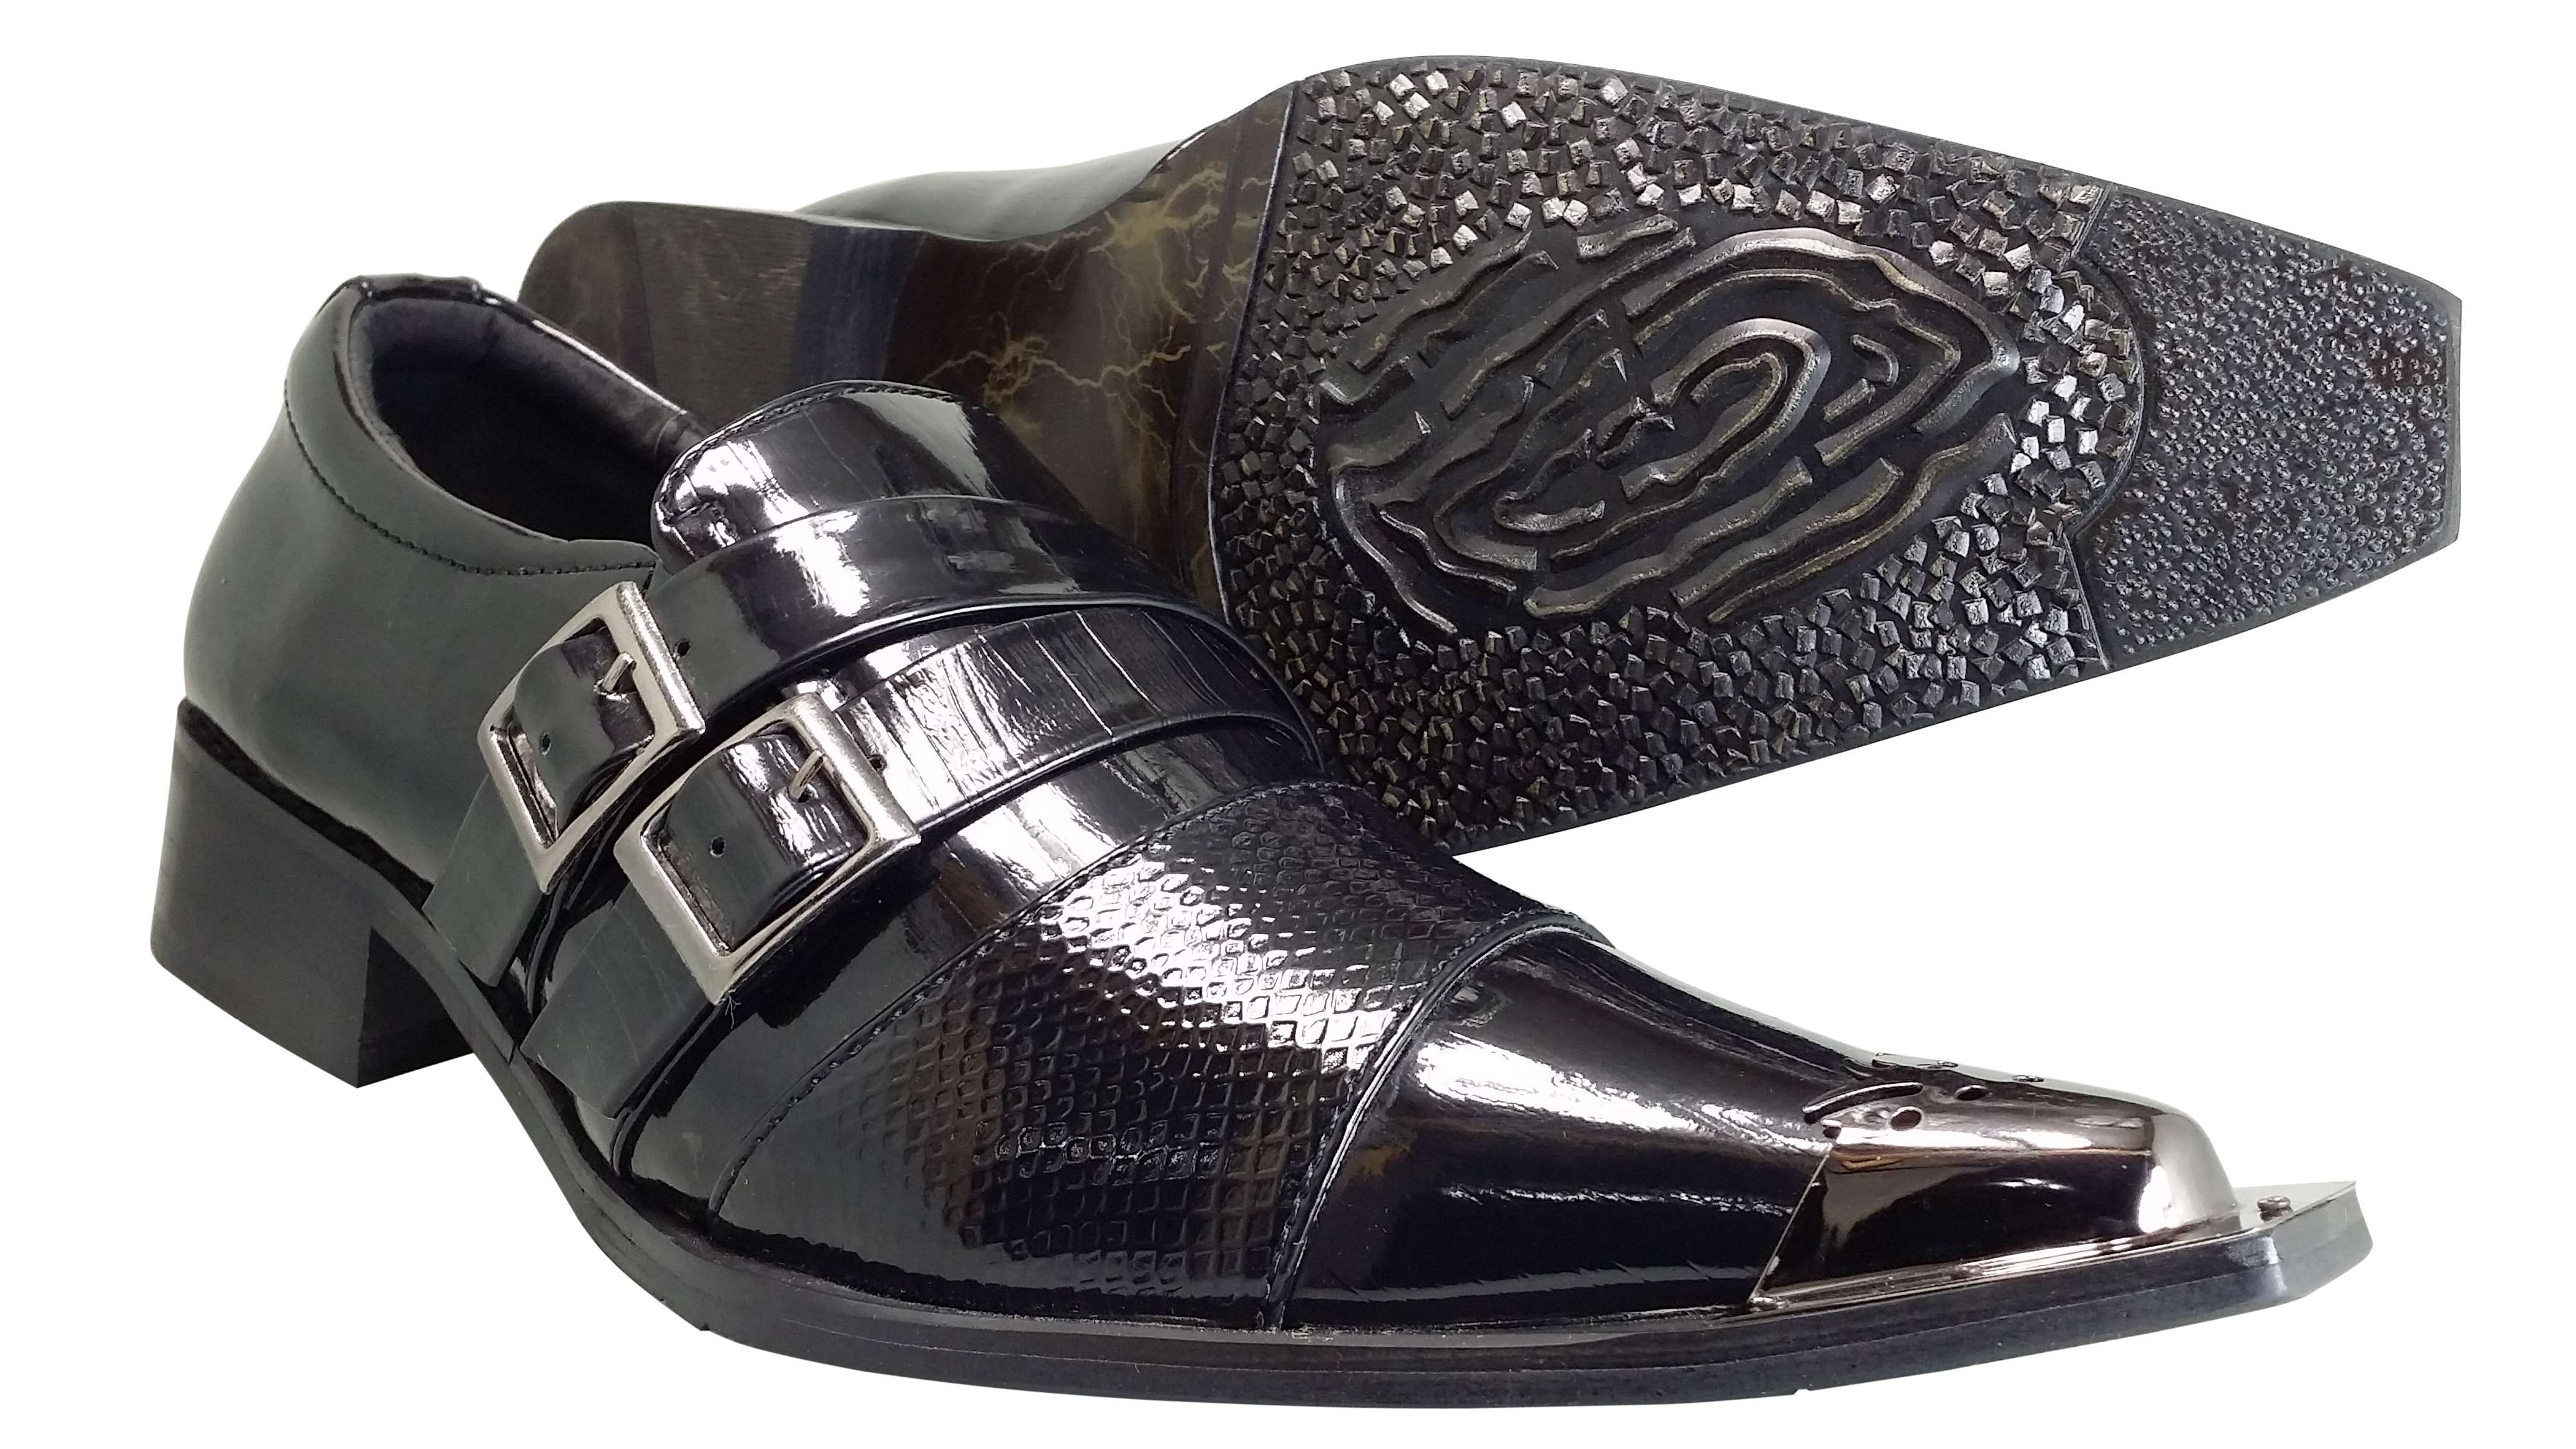 Men's Patent Leather Shoes Goldenhorse Dress Black Slip On Loafers ...